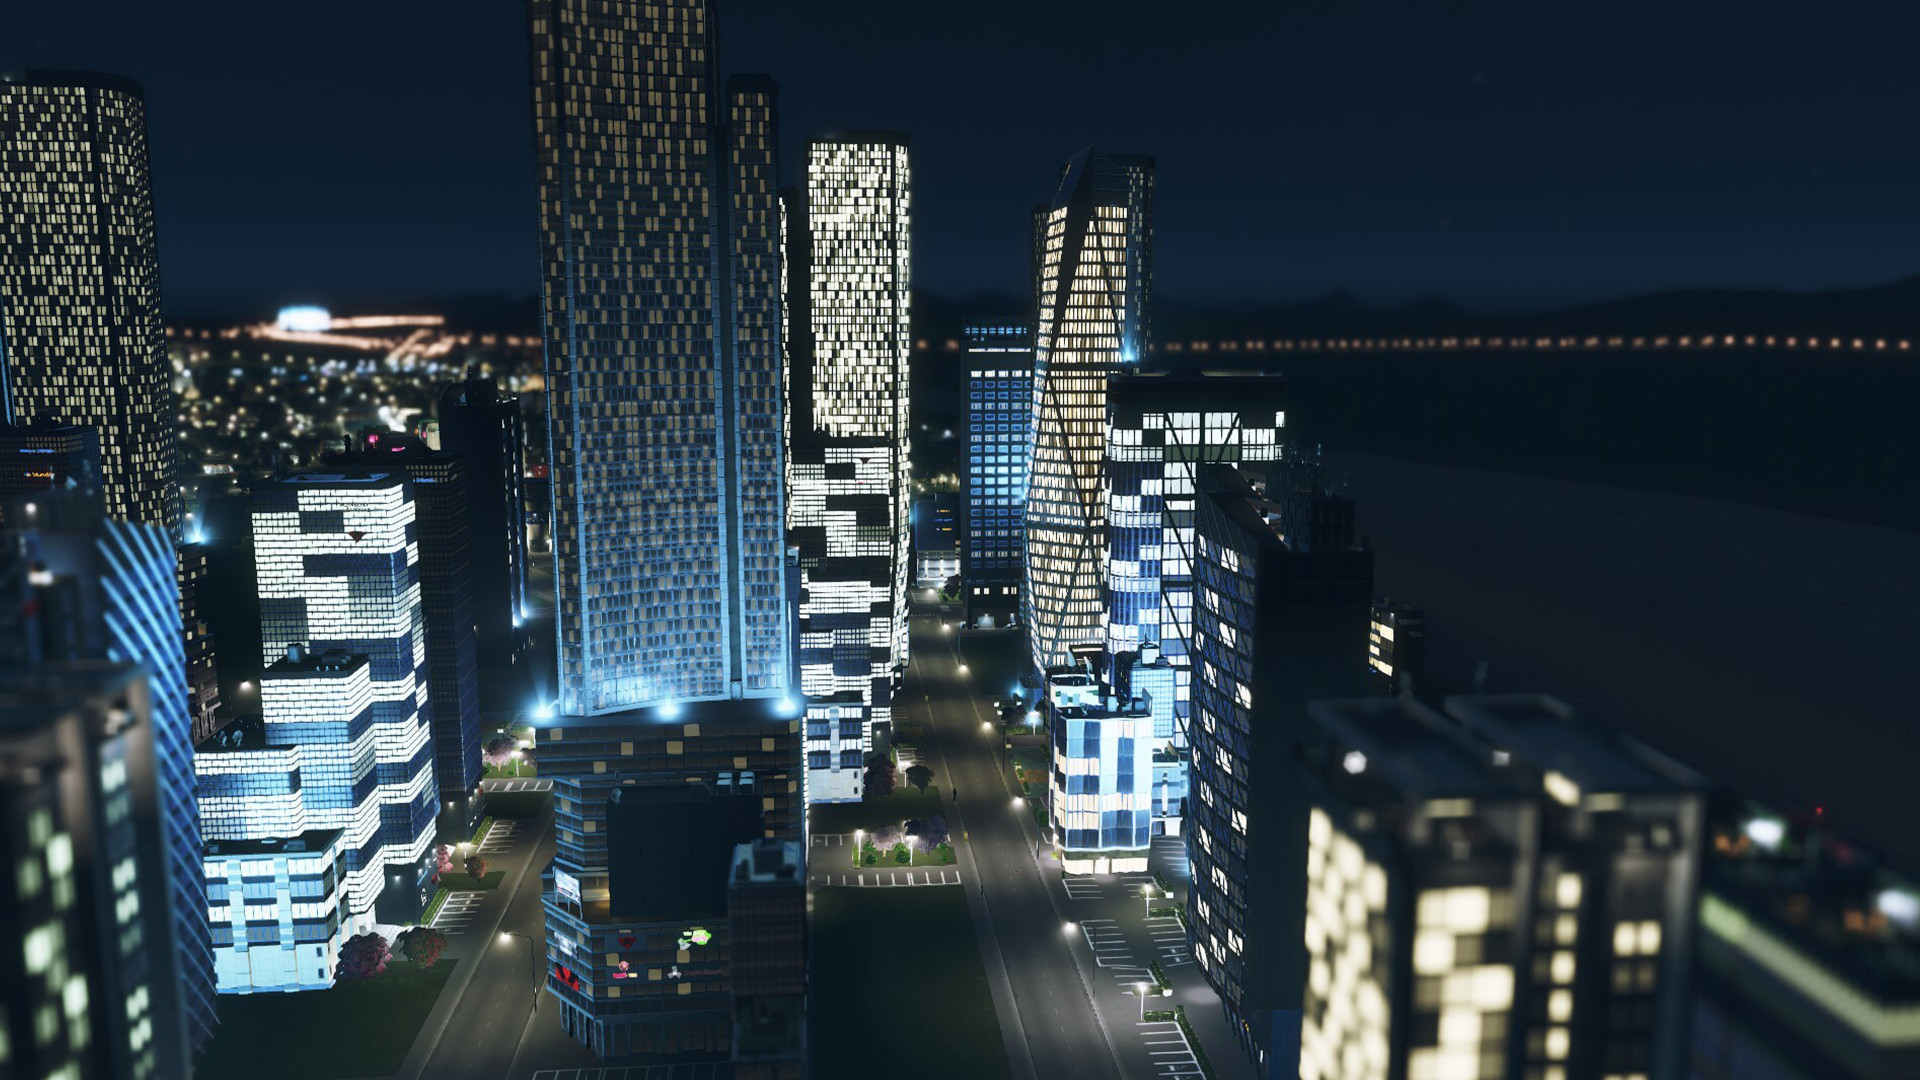 ritme kraai rekenmachine Cities: Skylines 2 Would Be Worse With Multiplayer, Says Studio - Gameranx